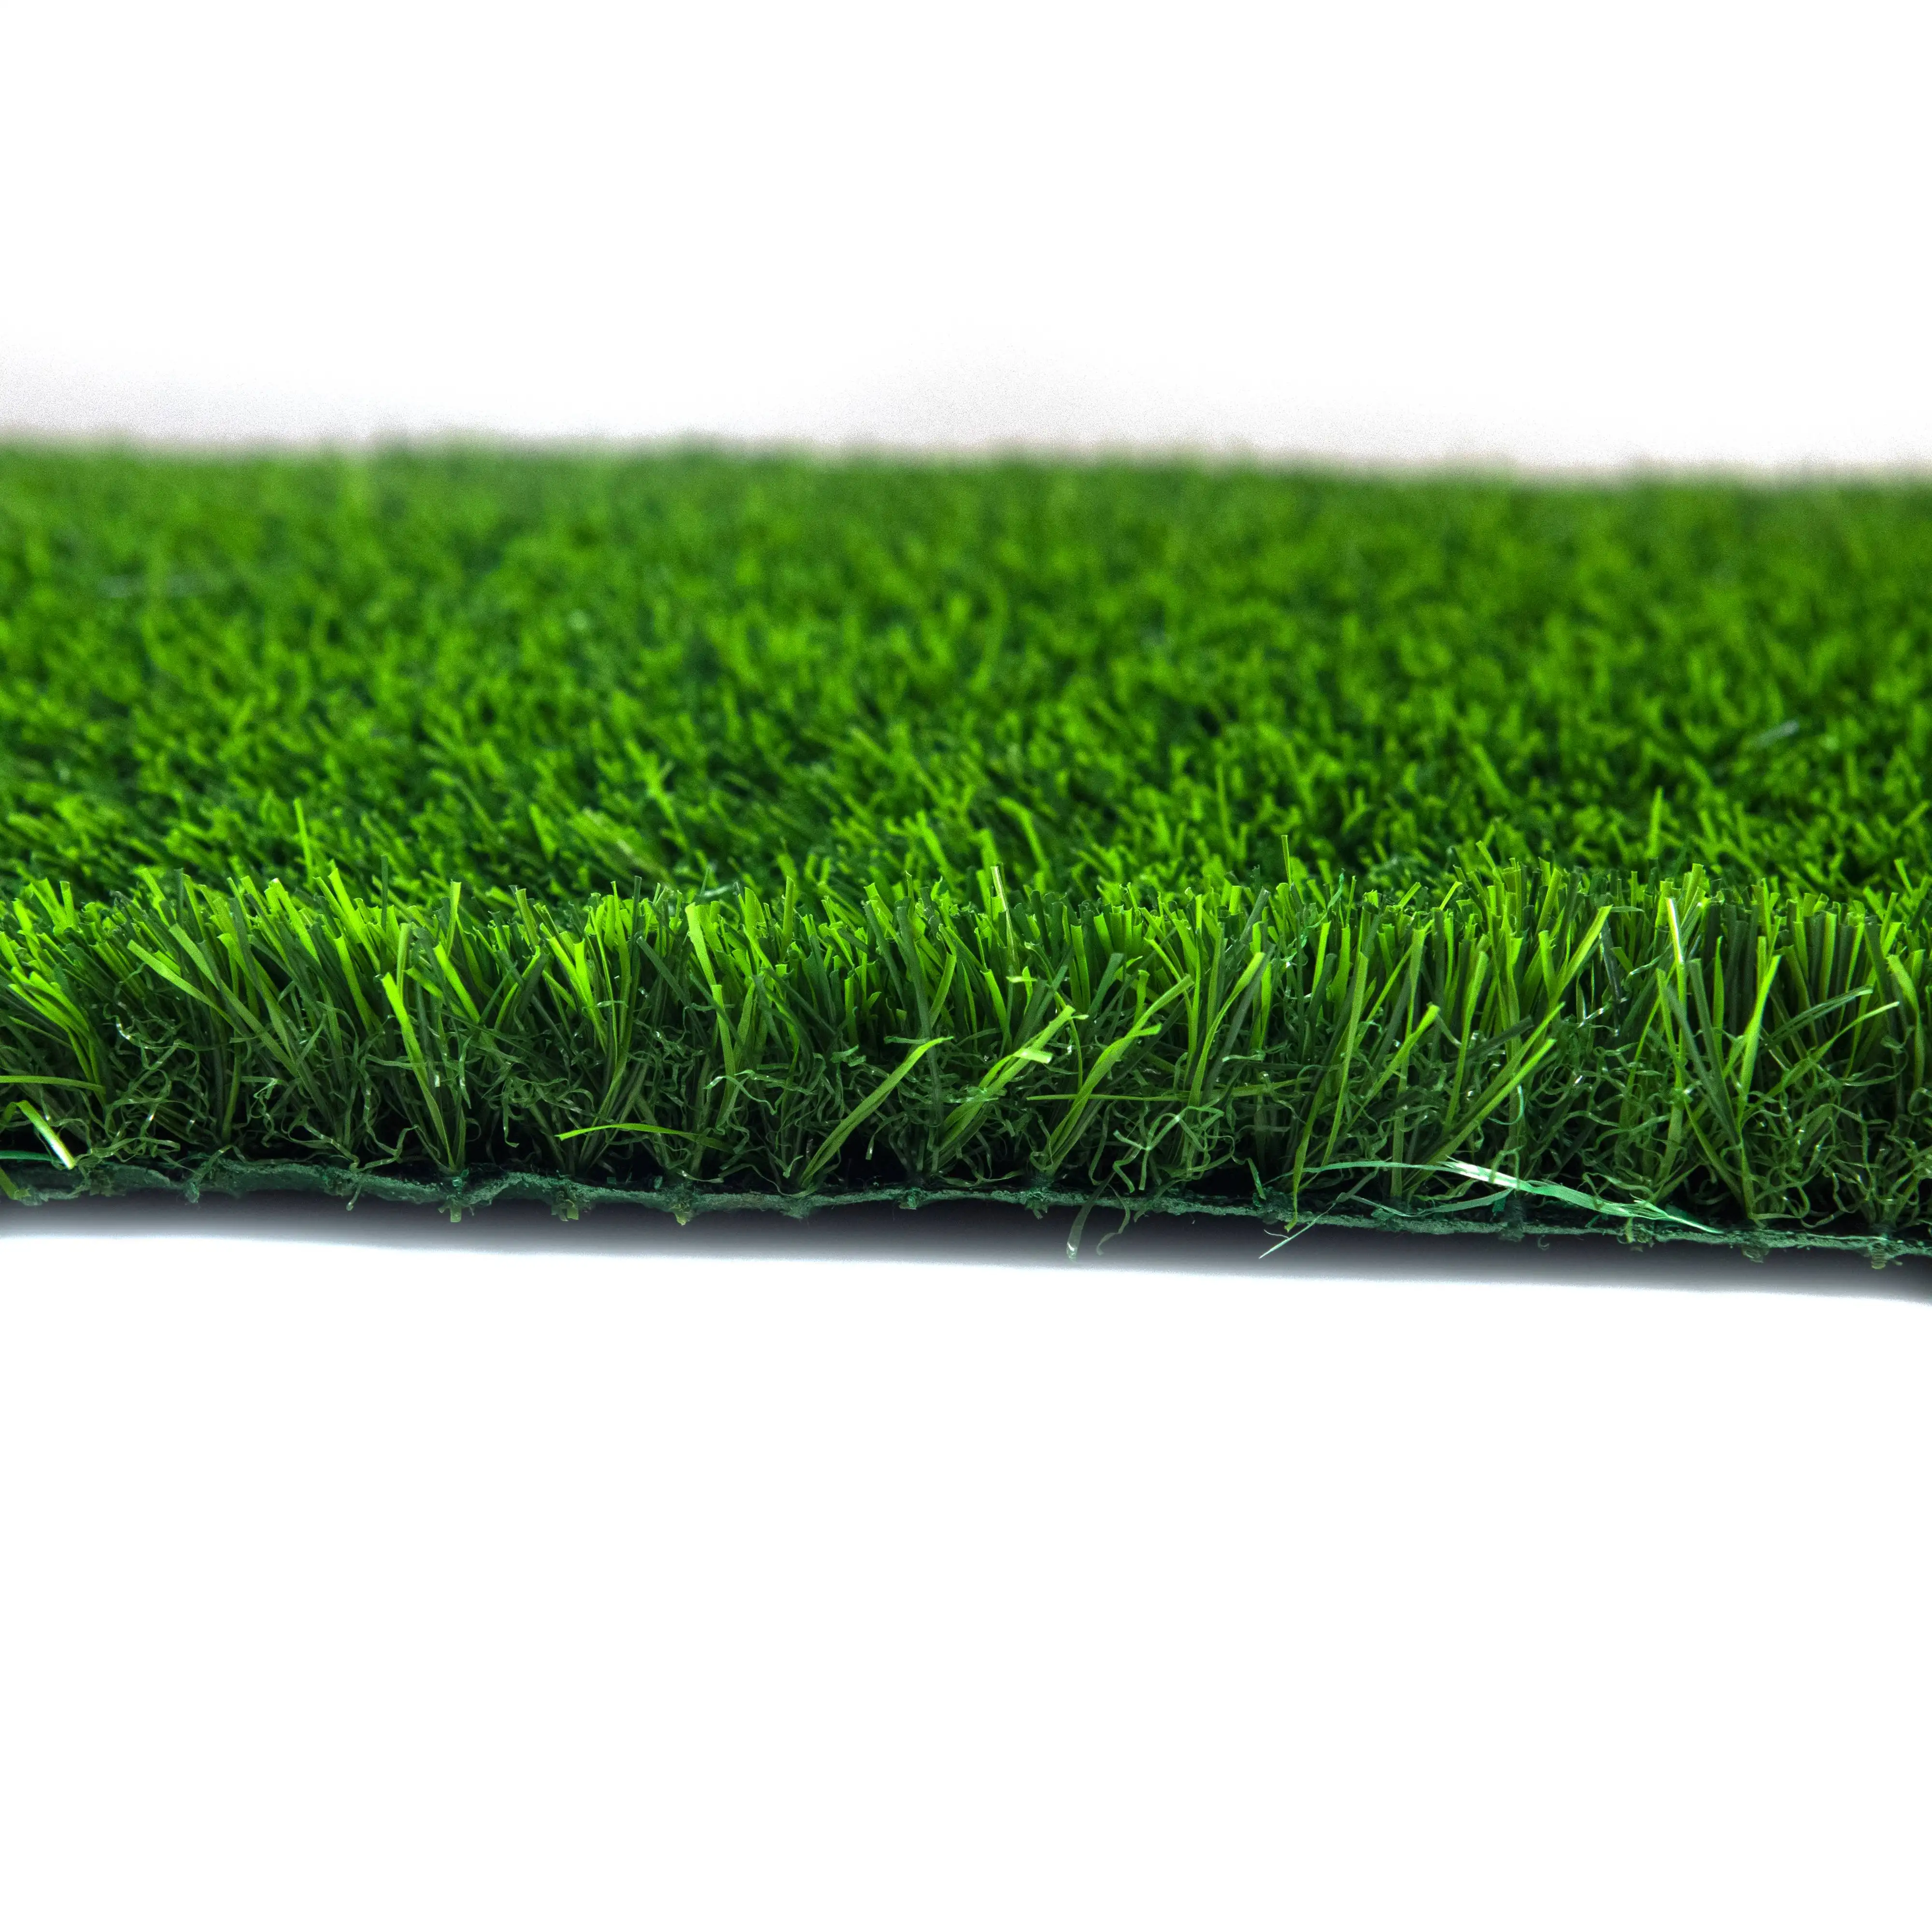 New landscape grass/artificial turf/artificial lawn grape vines rattan artificial flowers and plants